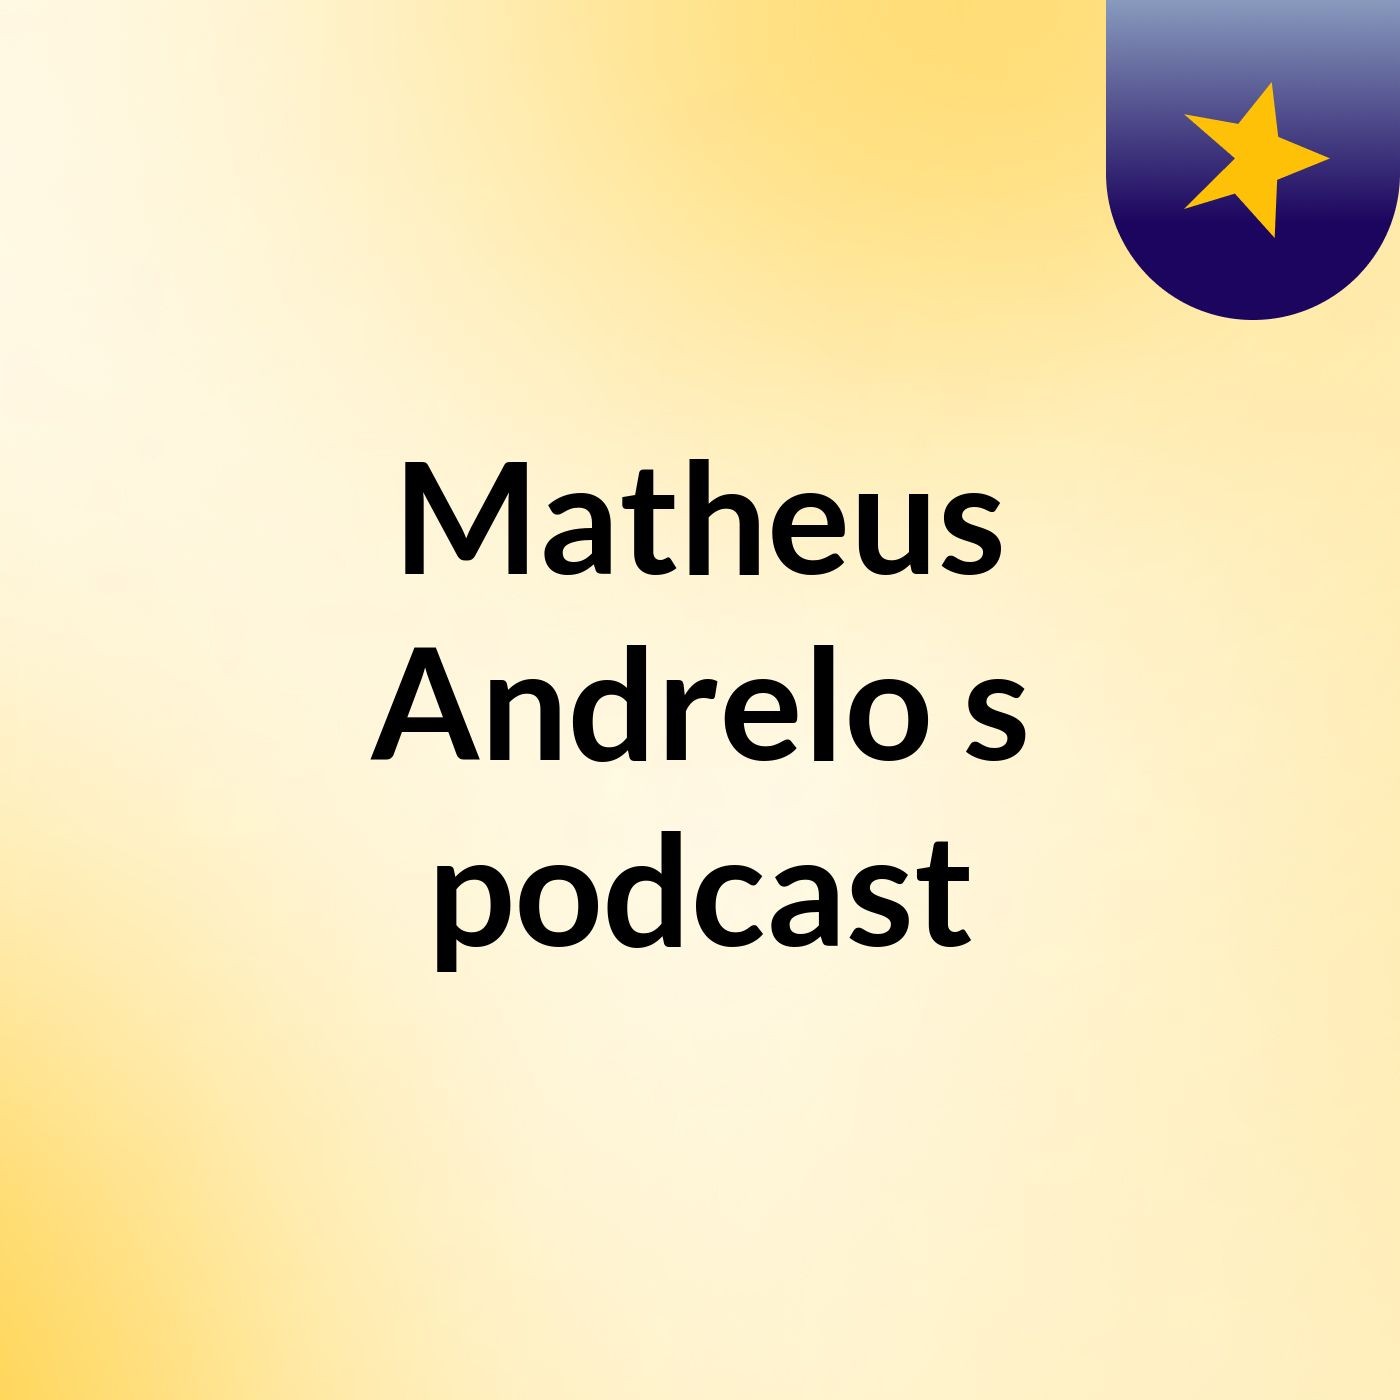 Matheus Andrelo's podcast